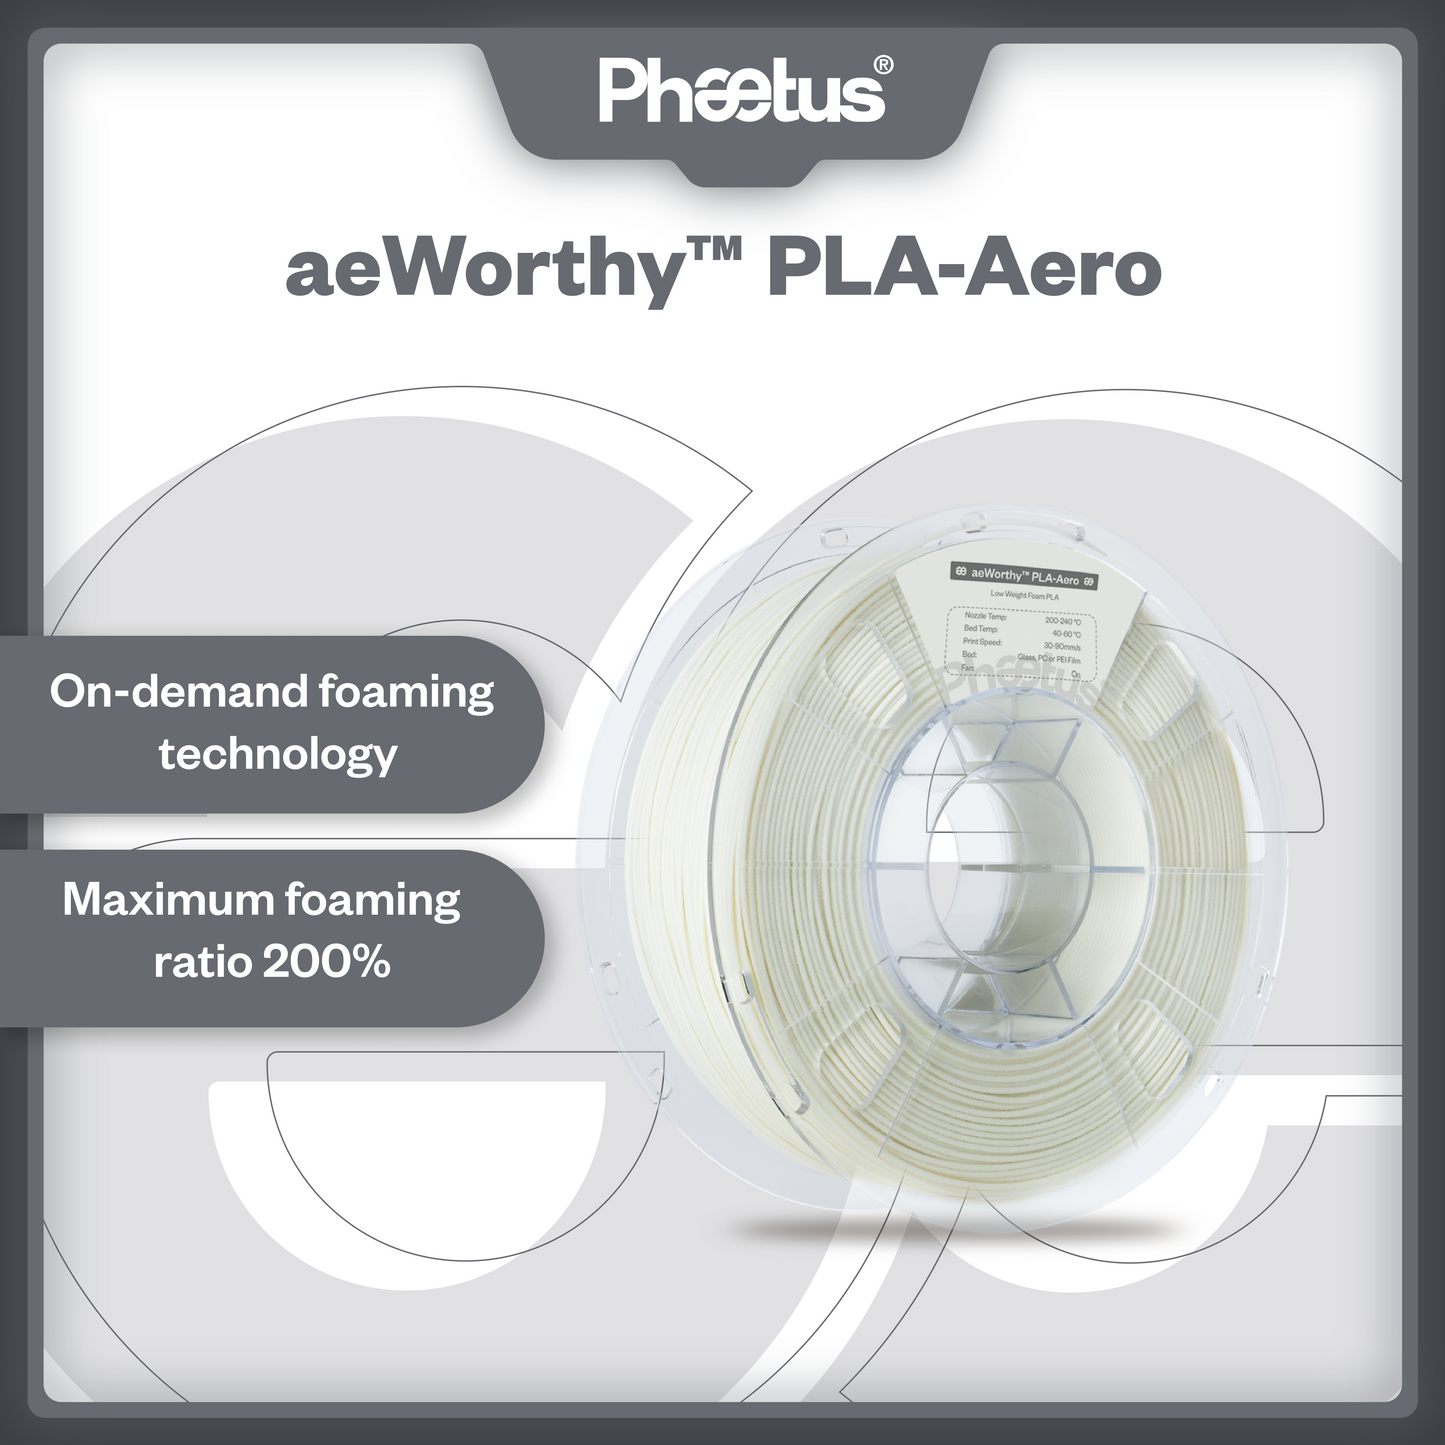 aeWorthy™ PLA-AERO